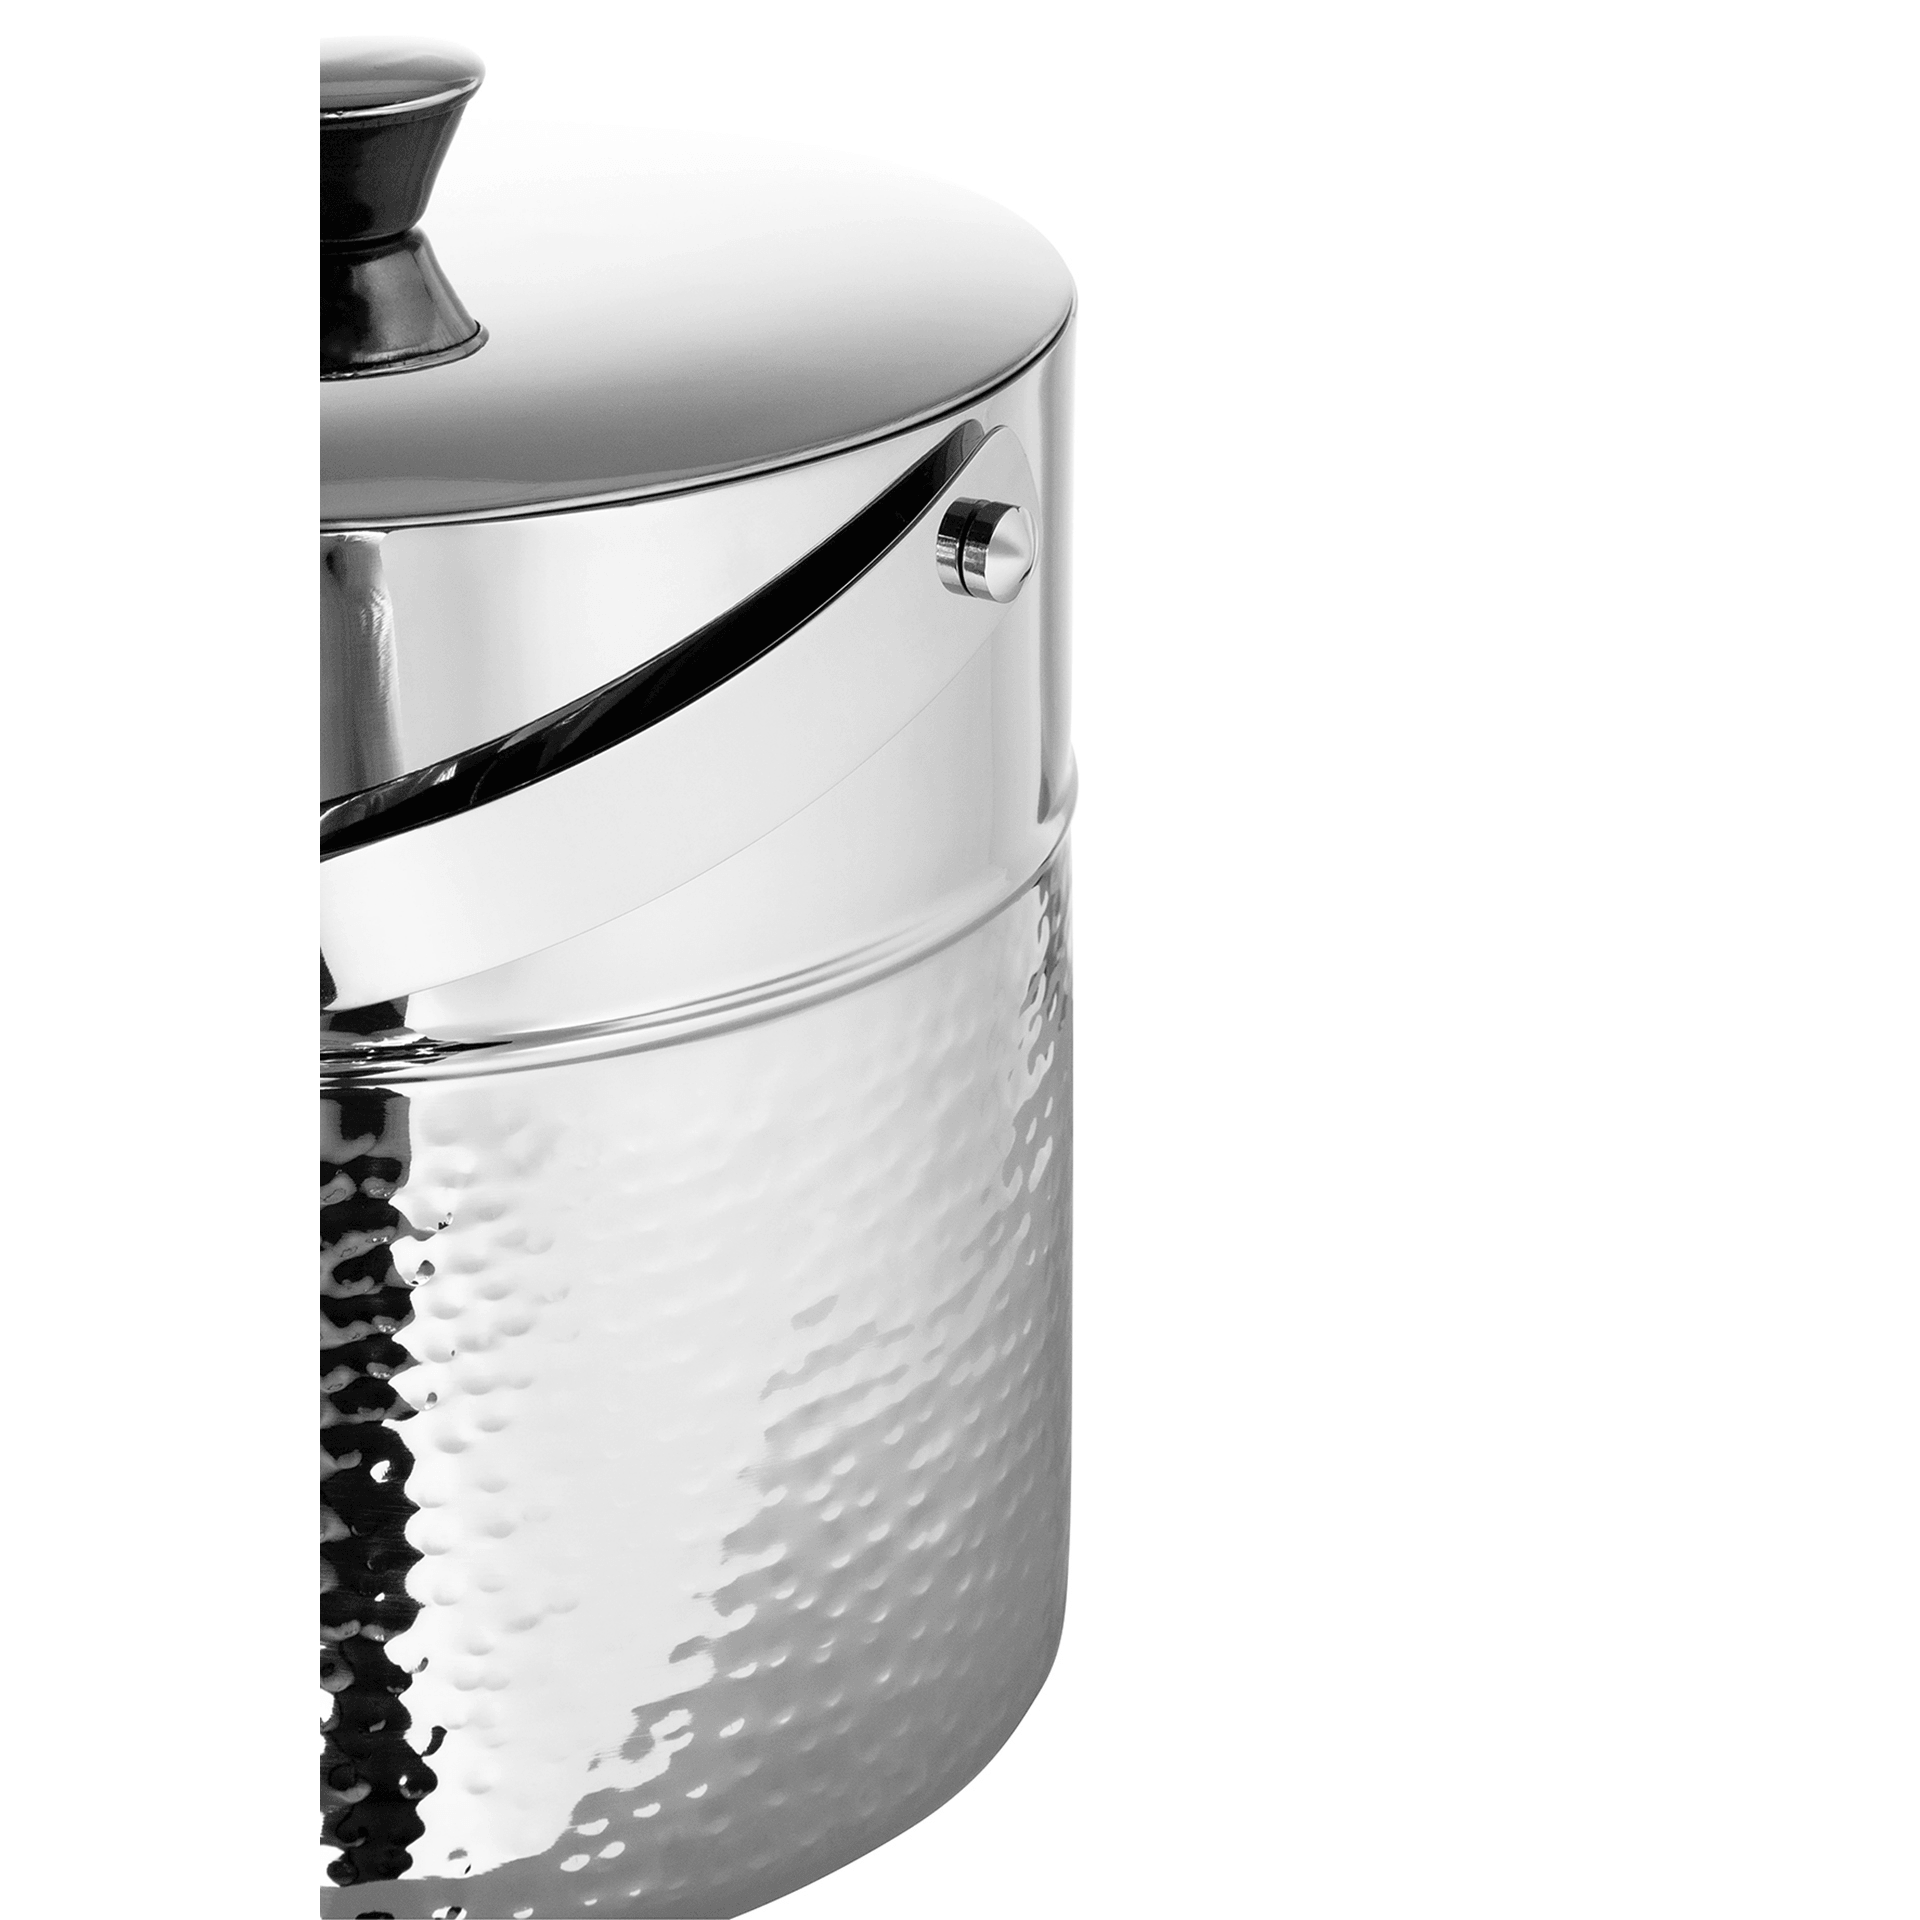 Nassau Flaschenkühler Edelstahl, hochglanzpoliert, doppelwandig gehämmert - HomeDesign Knaus